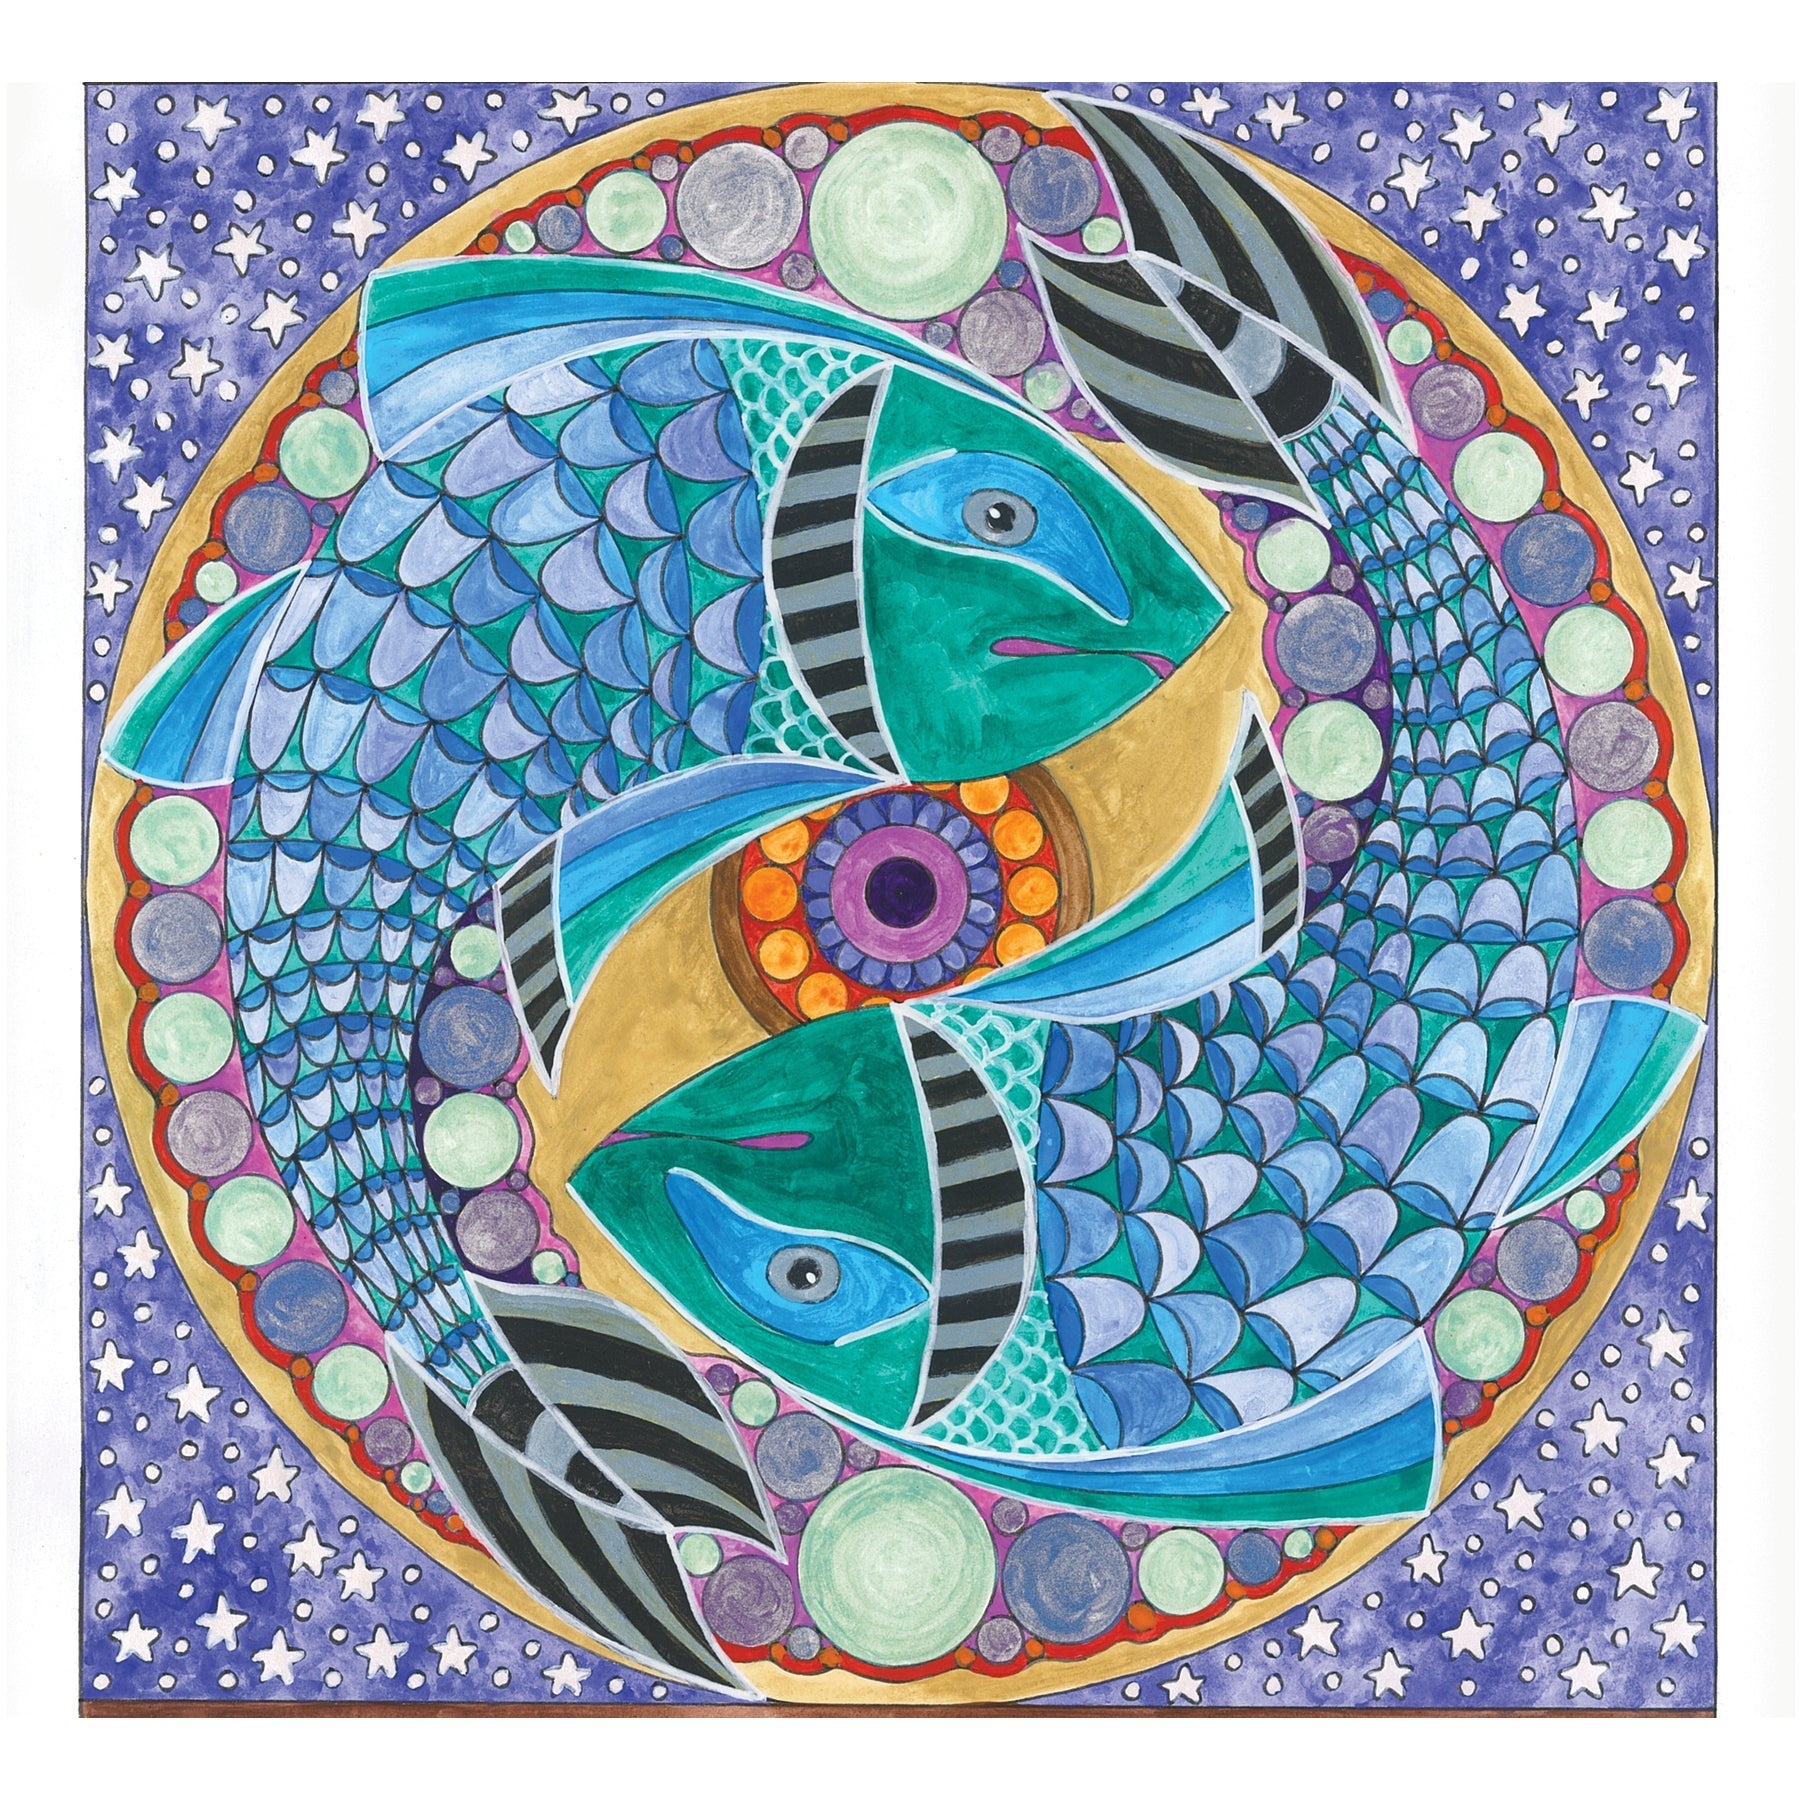 Pisces, rug hooking pattern